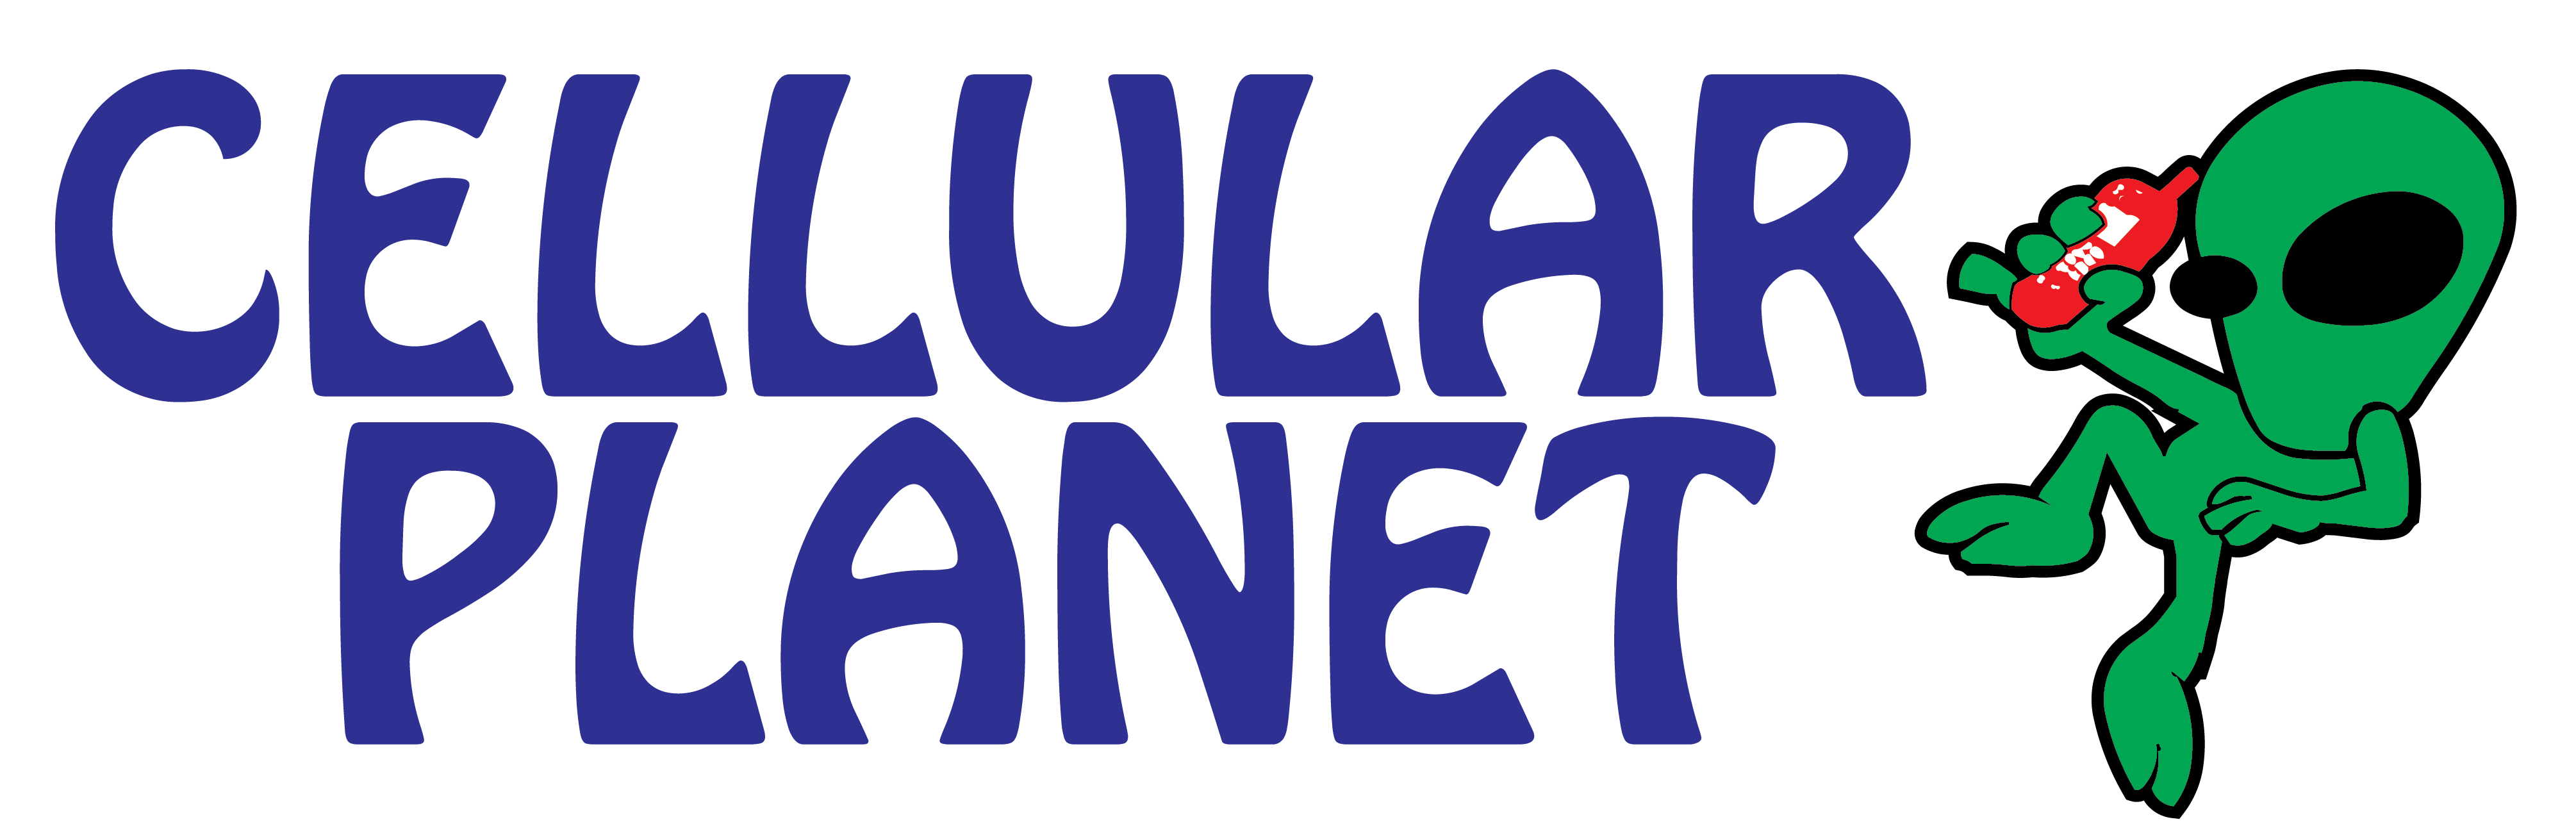 Cellular Planet